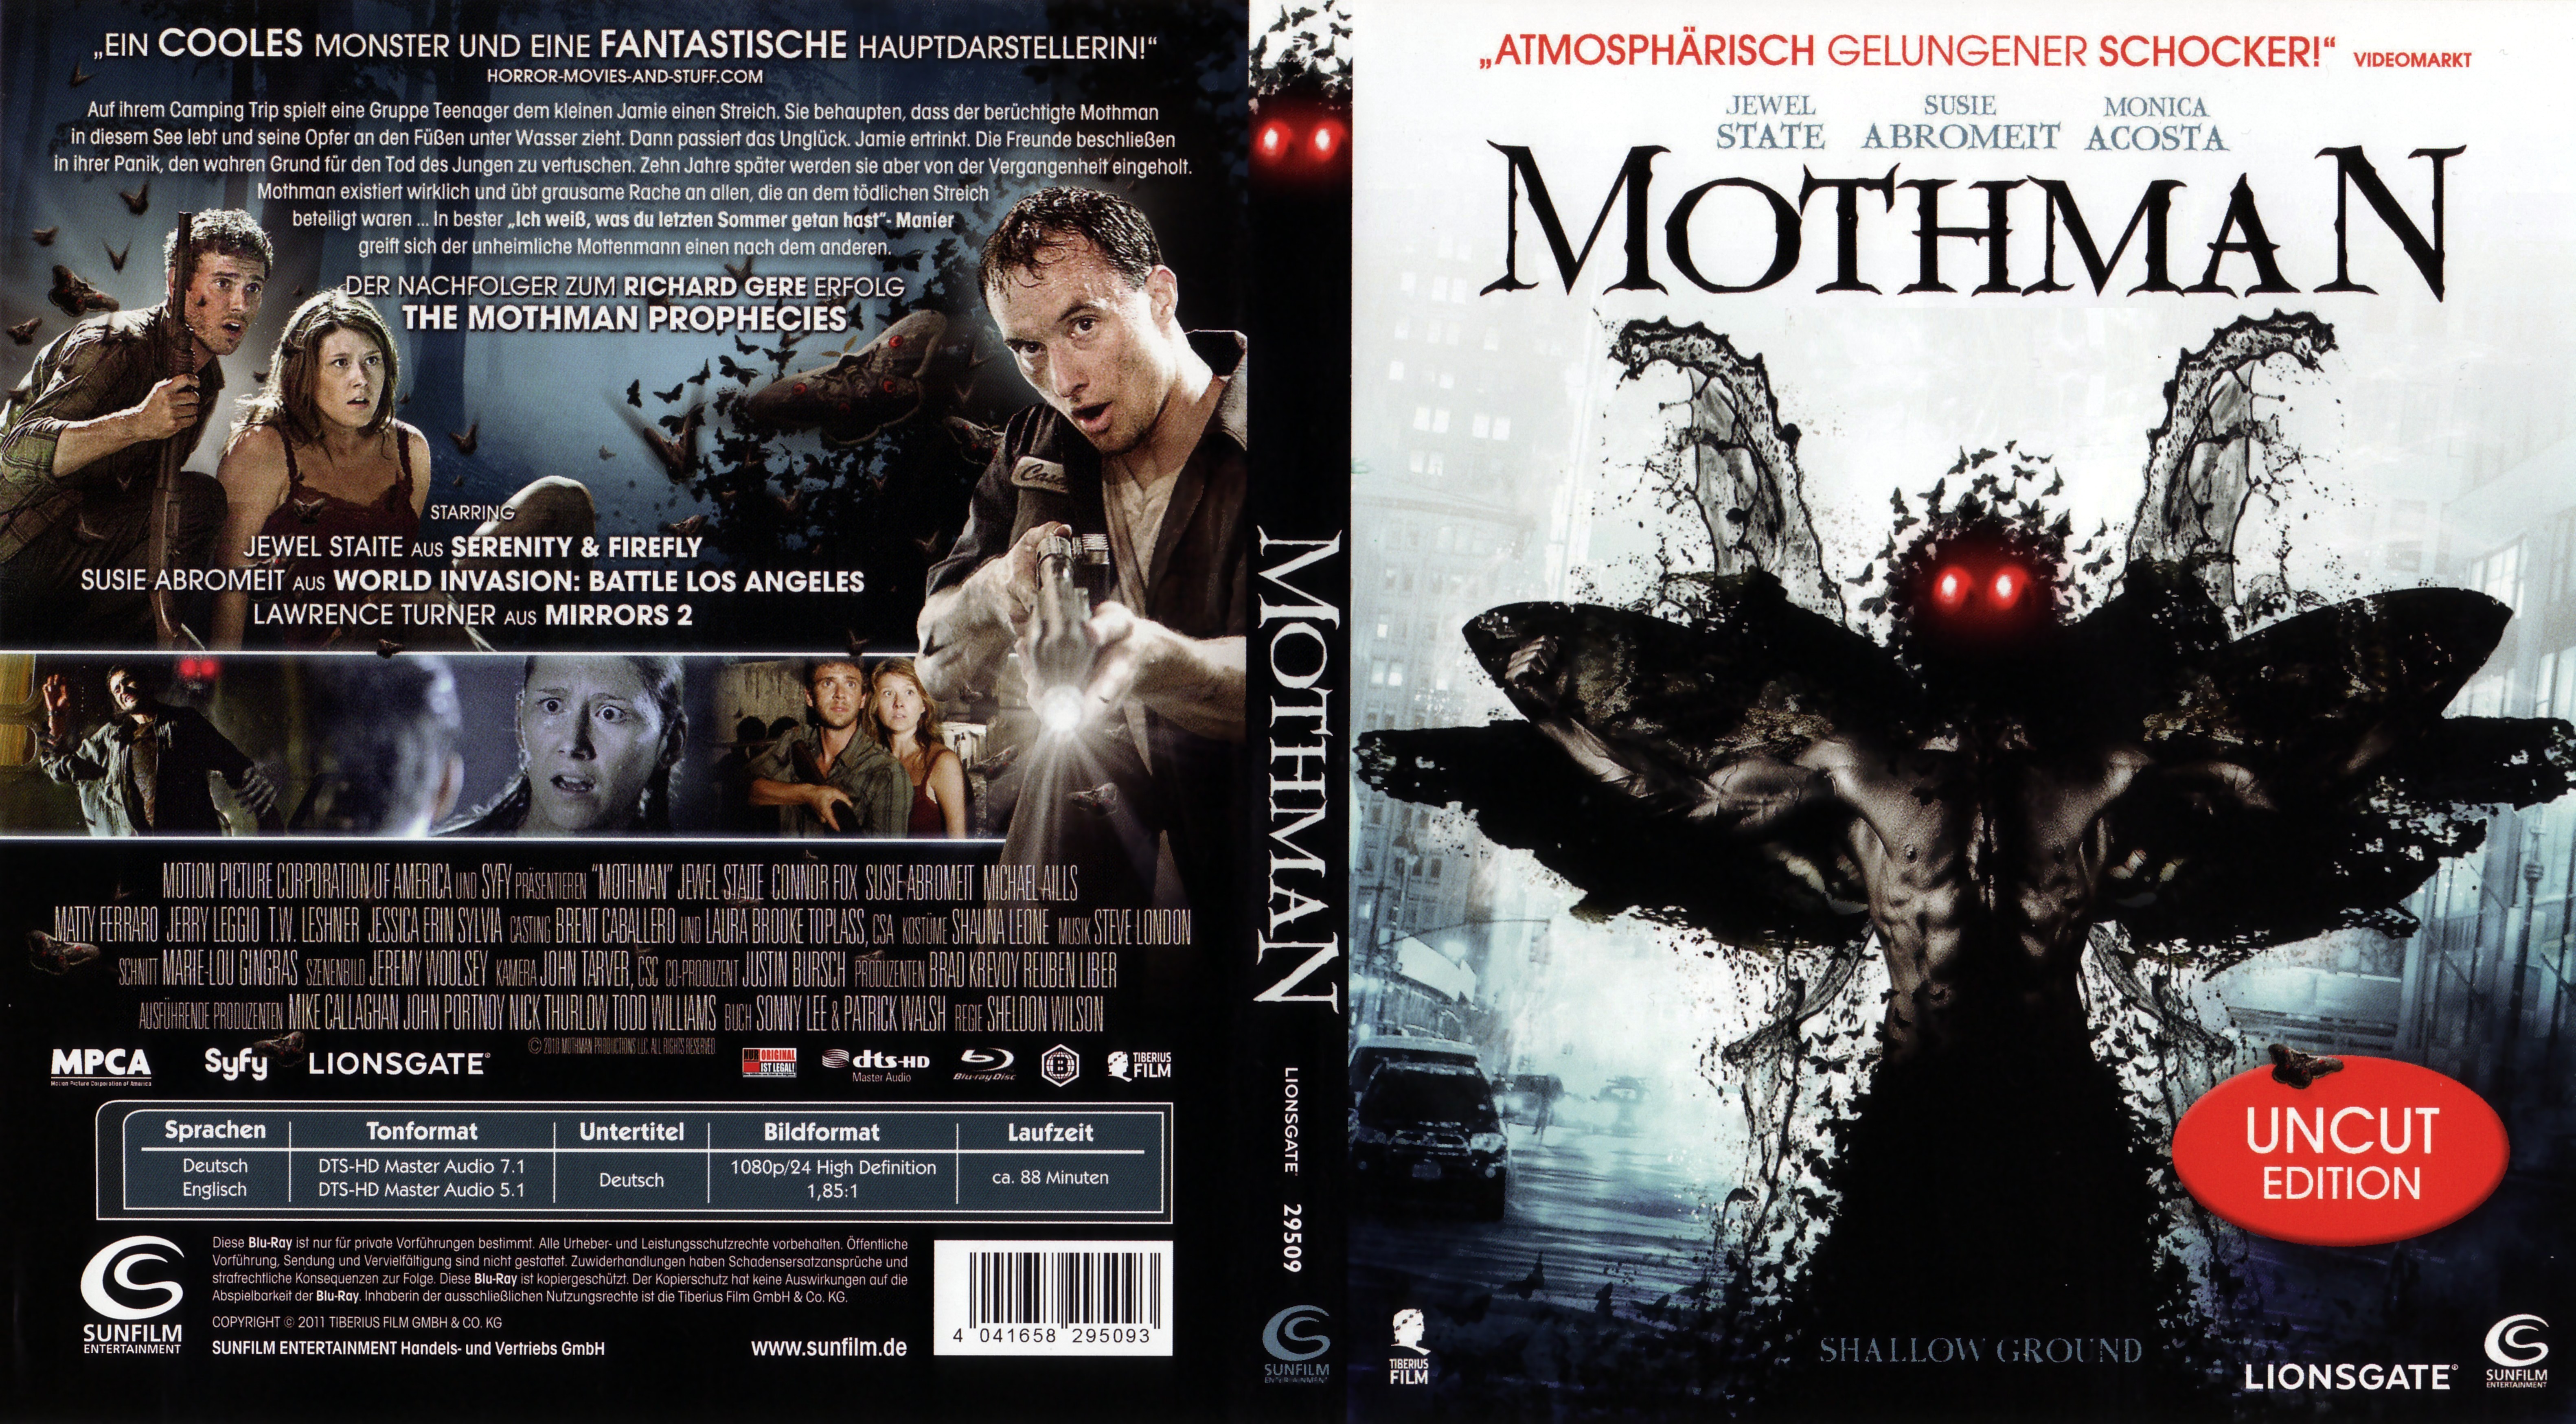 Jaquette DVD Mothman Zone 1 (BLU-RAY)